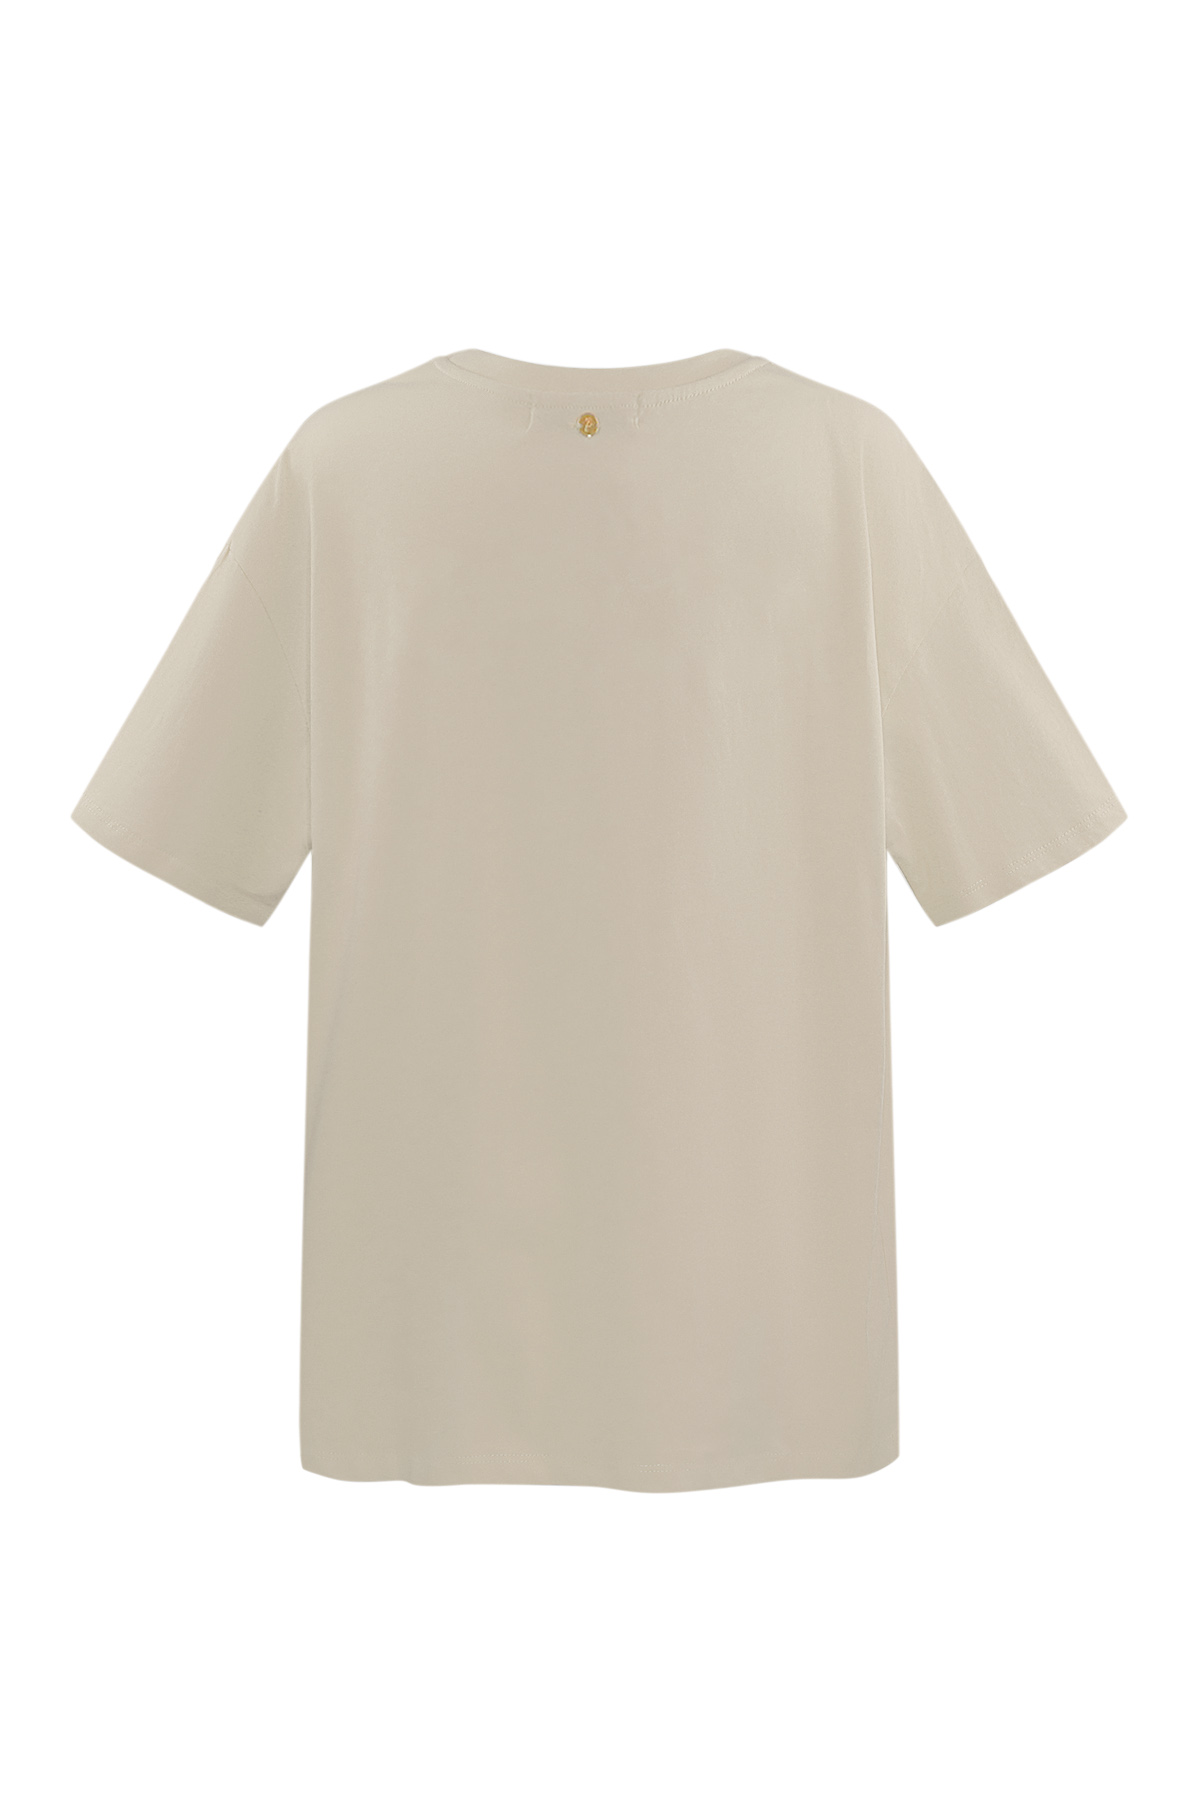 T-shirt ma perle - beige Image7